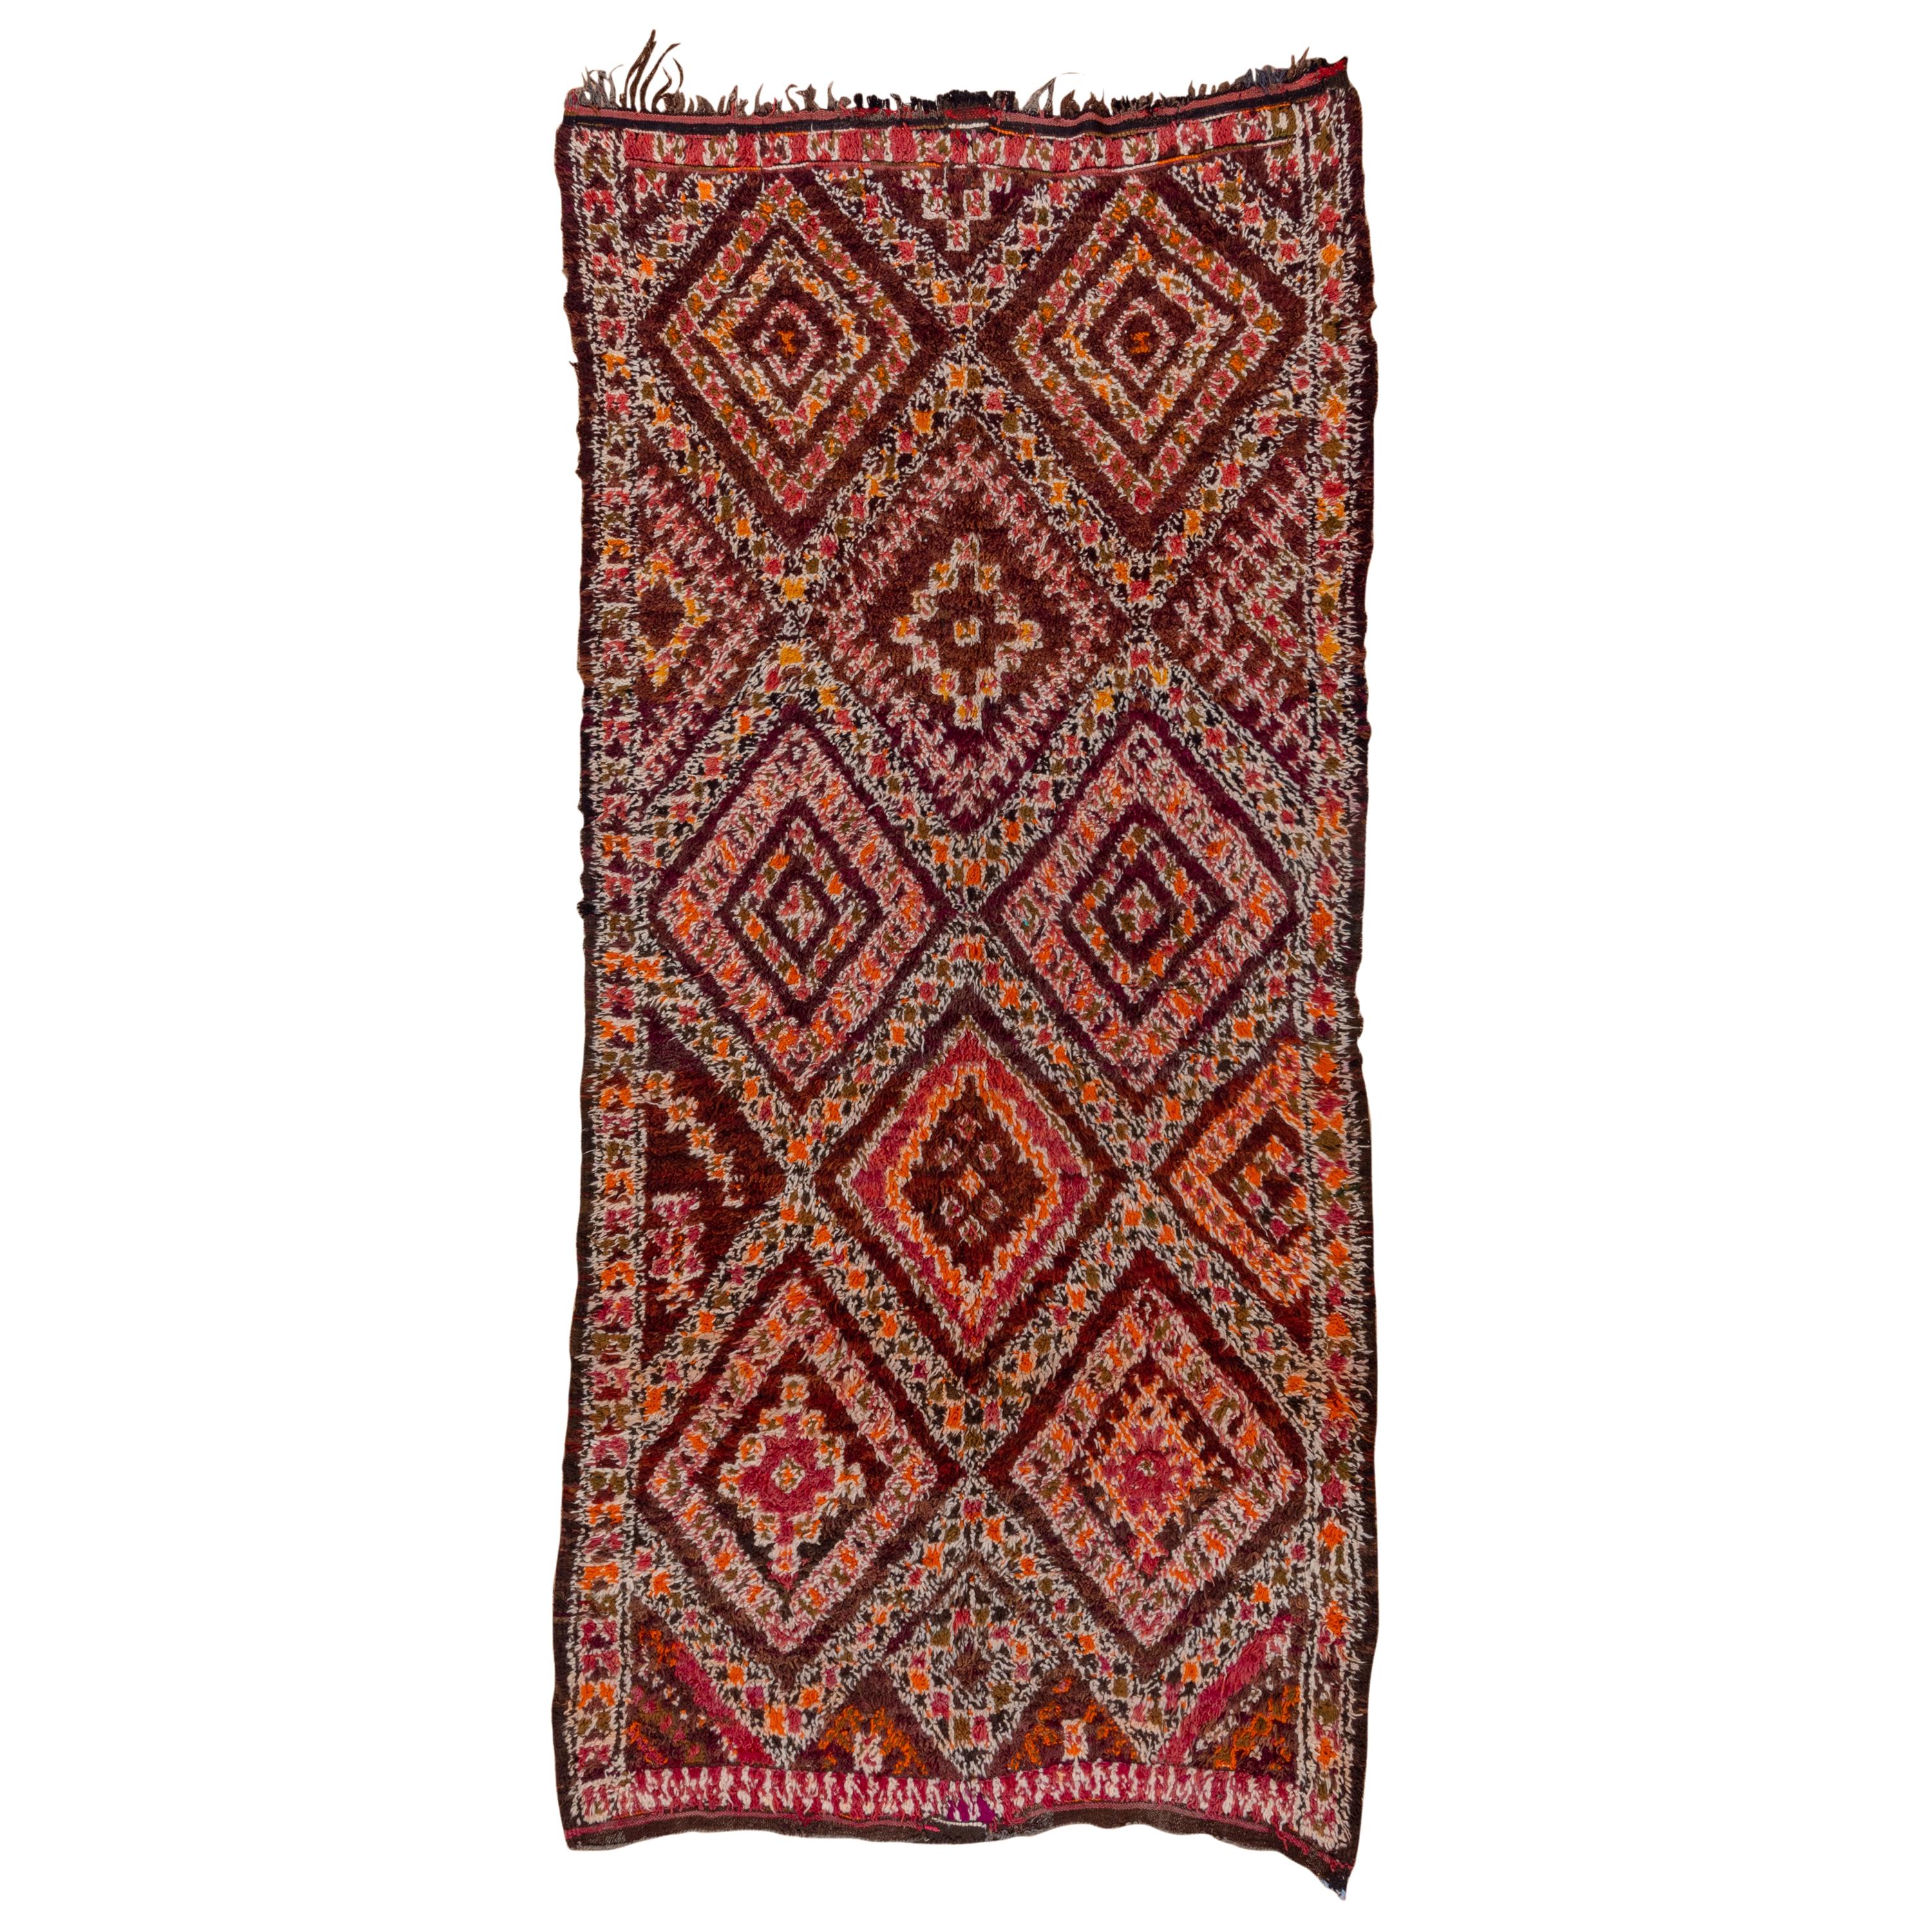 Vintage Colorful Moroccan Berber Gallery Rug